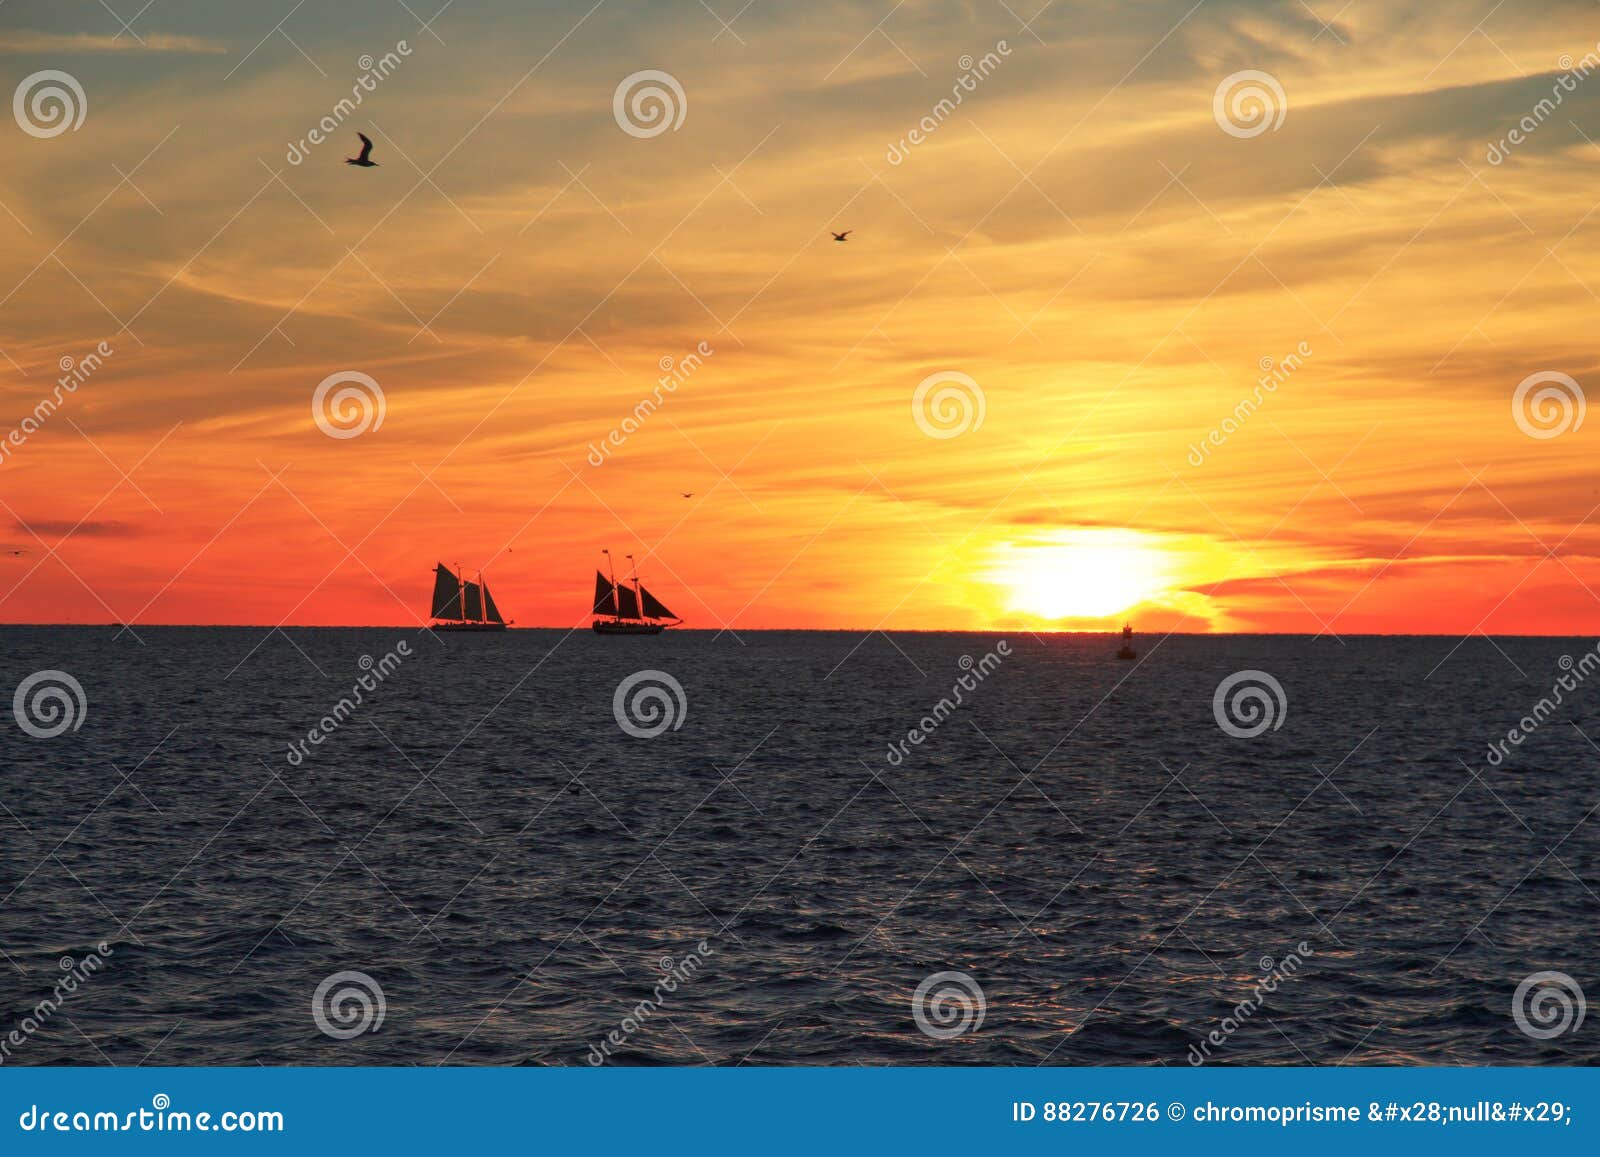 KEY WEST Sunset Sail 11x14 Matted Art Photo Photograph Florida Keys Sailing Boat 